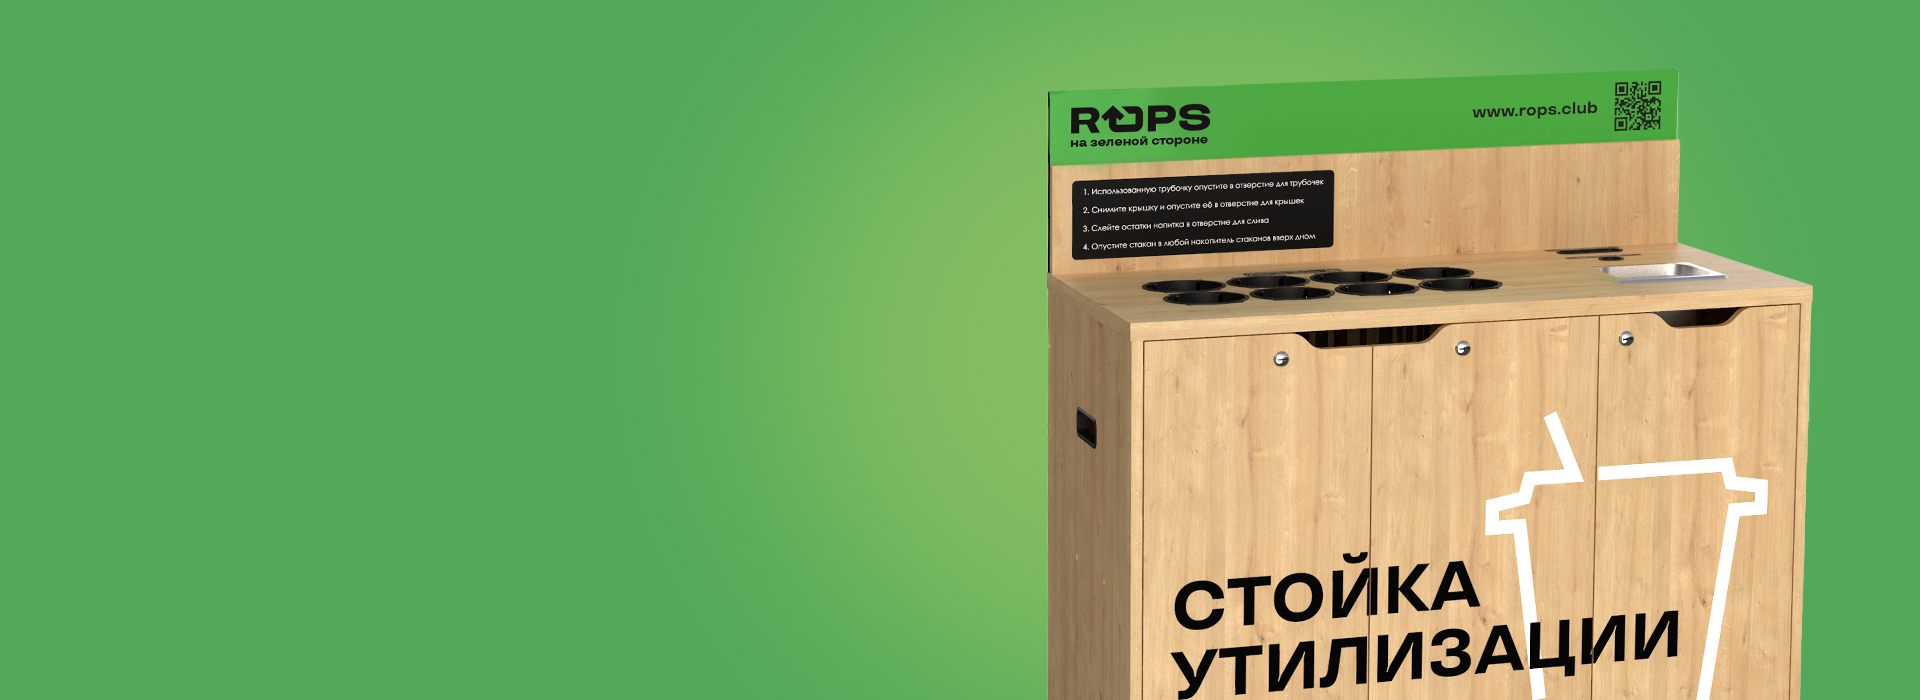 ROPS — создание эко-бренда — A.STUDIO